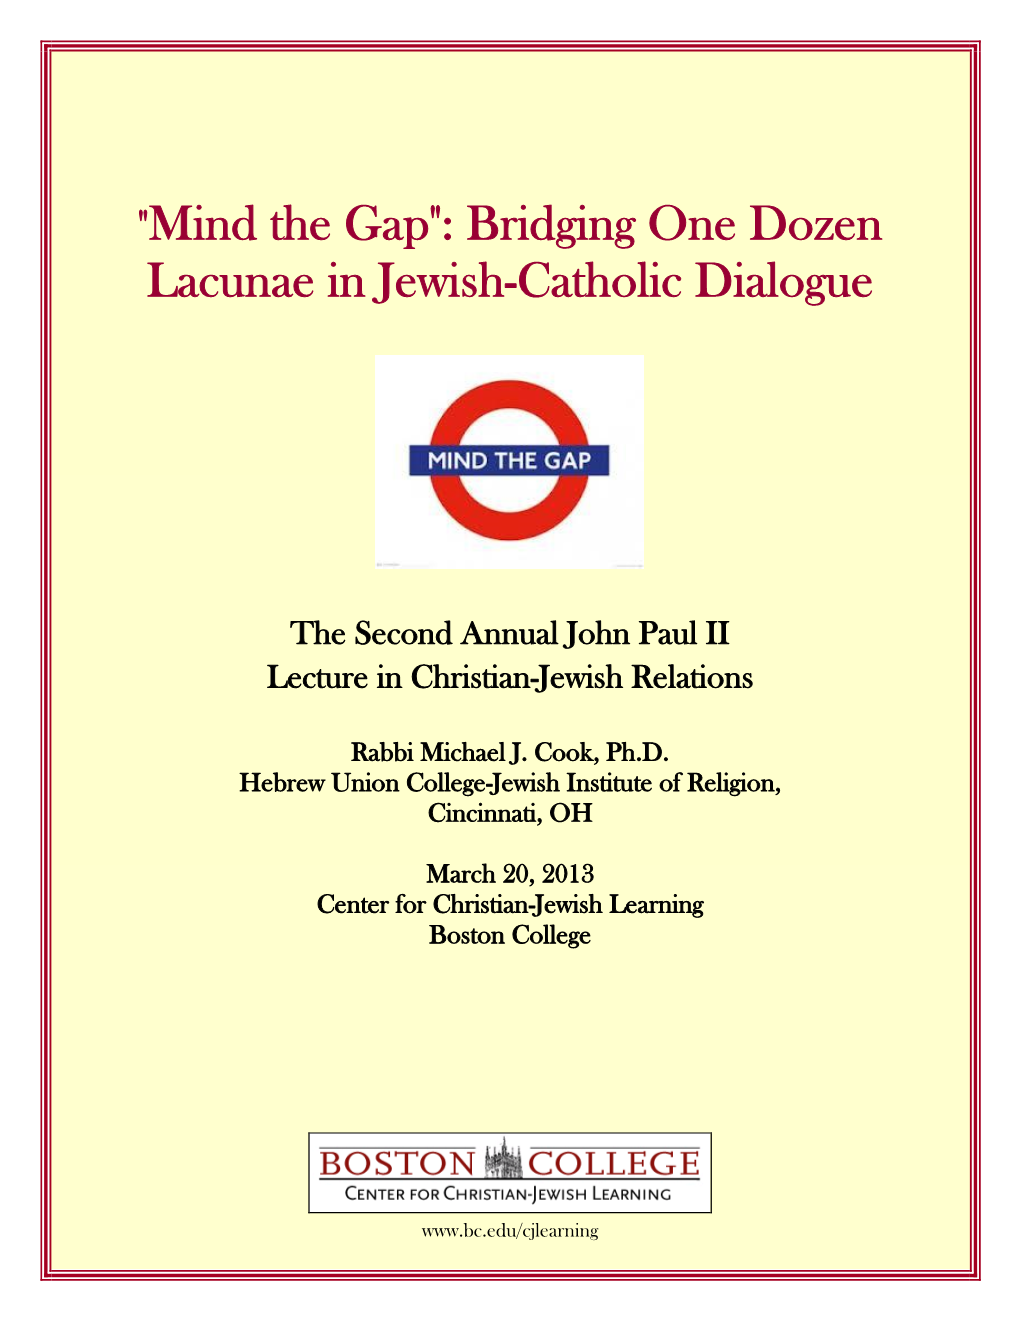 "Mind the Gap": Bridging One Dozen Lacunae in Jewish-Catholic Dialogue